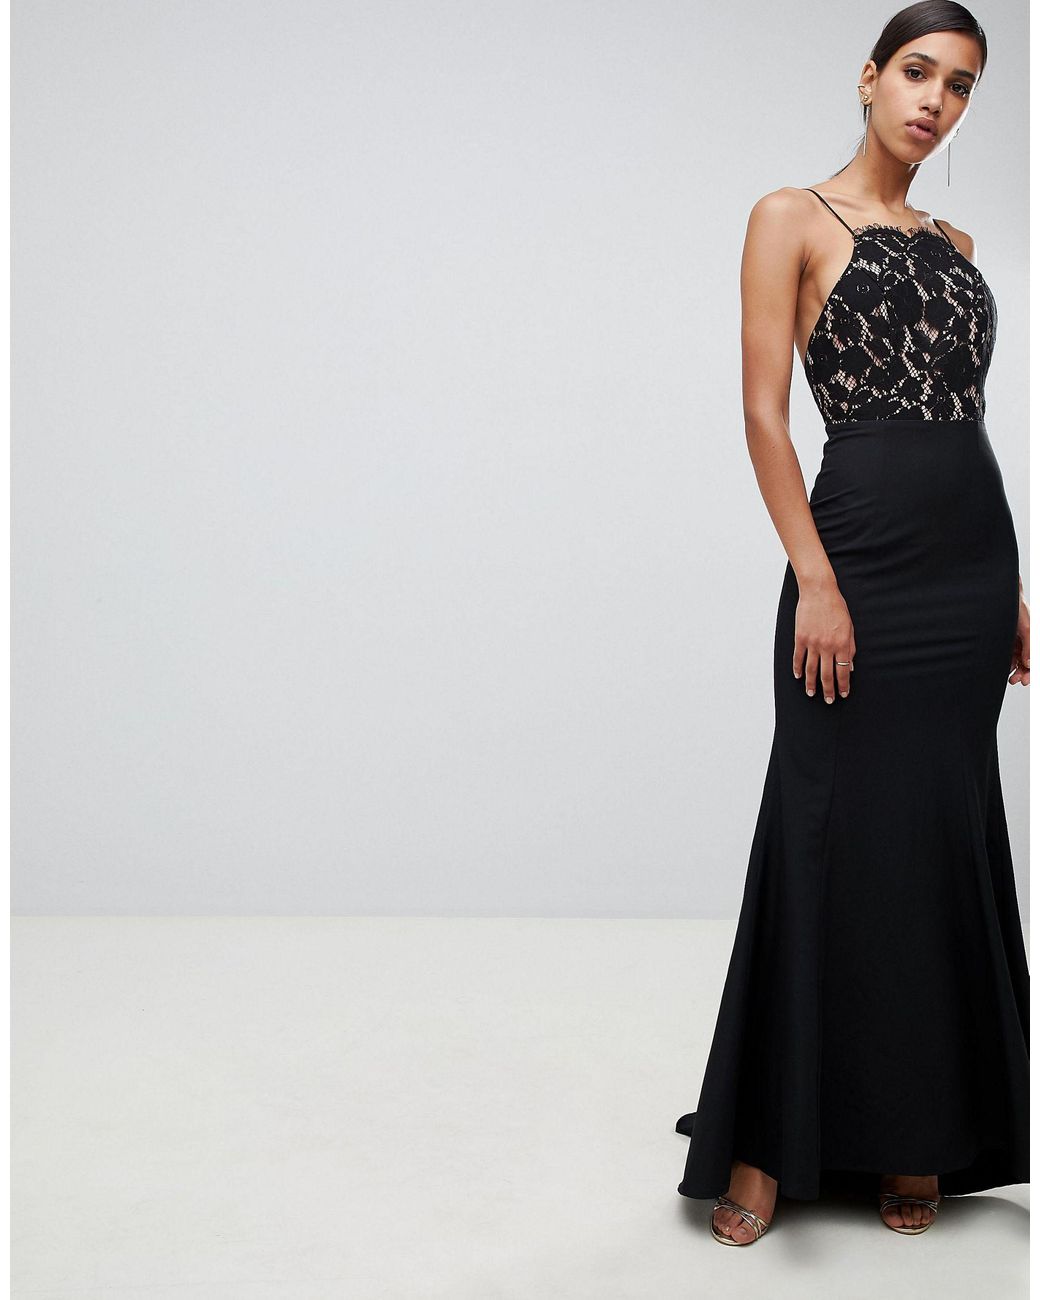 Jarlo Lace Top Open Back Fishtail Maxi Dress in Black | Lyst